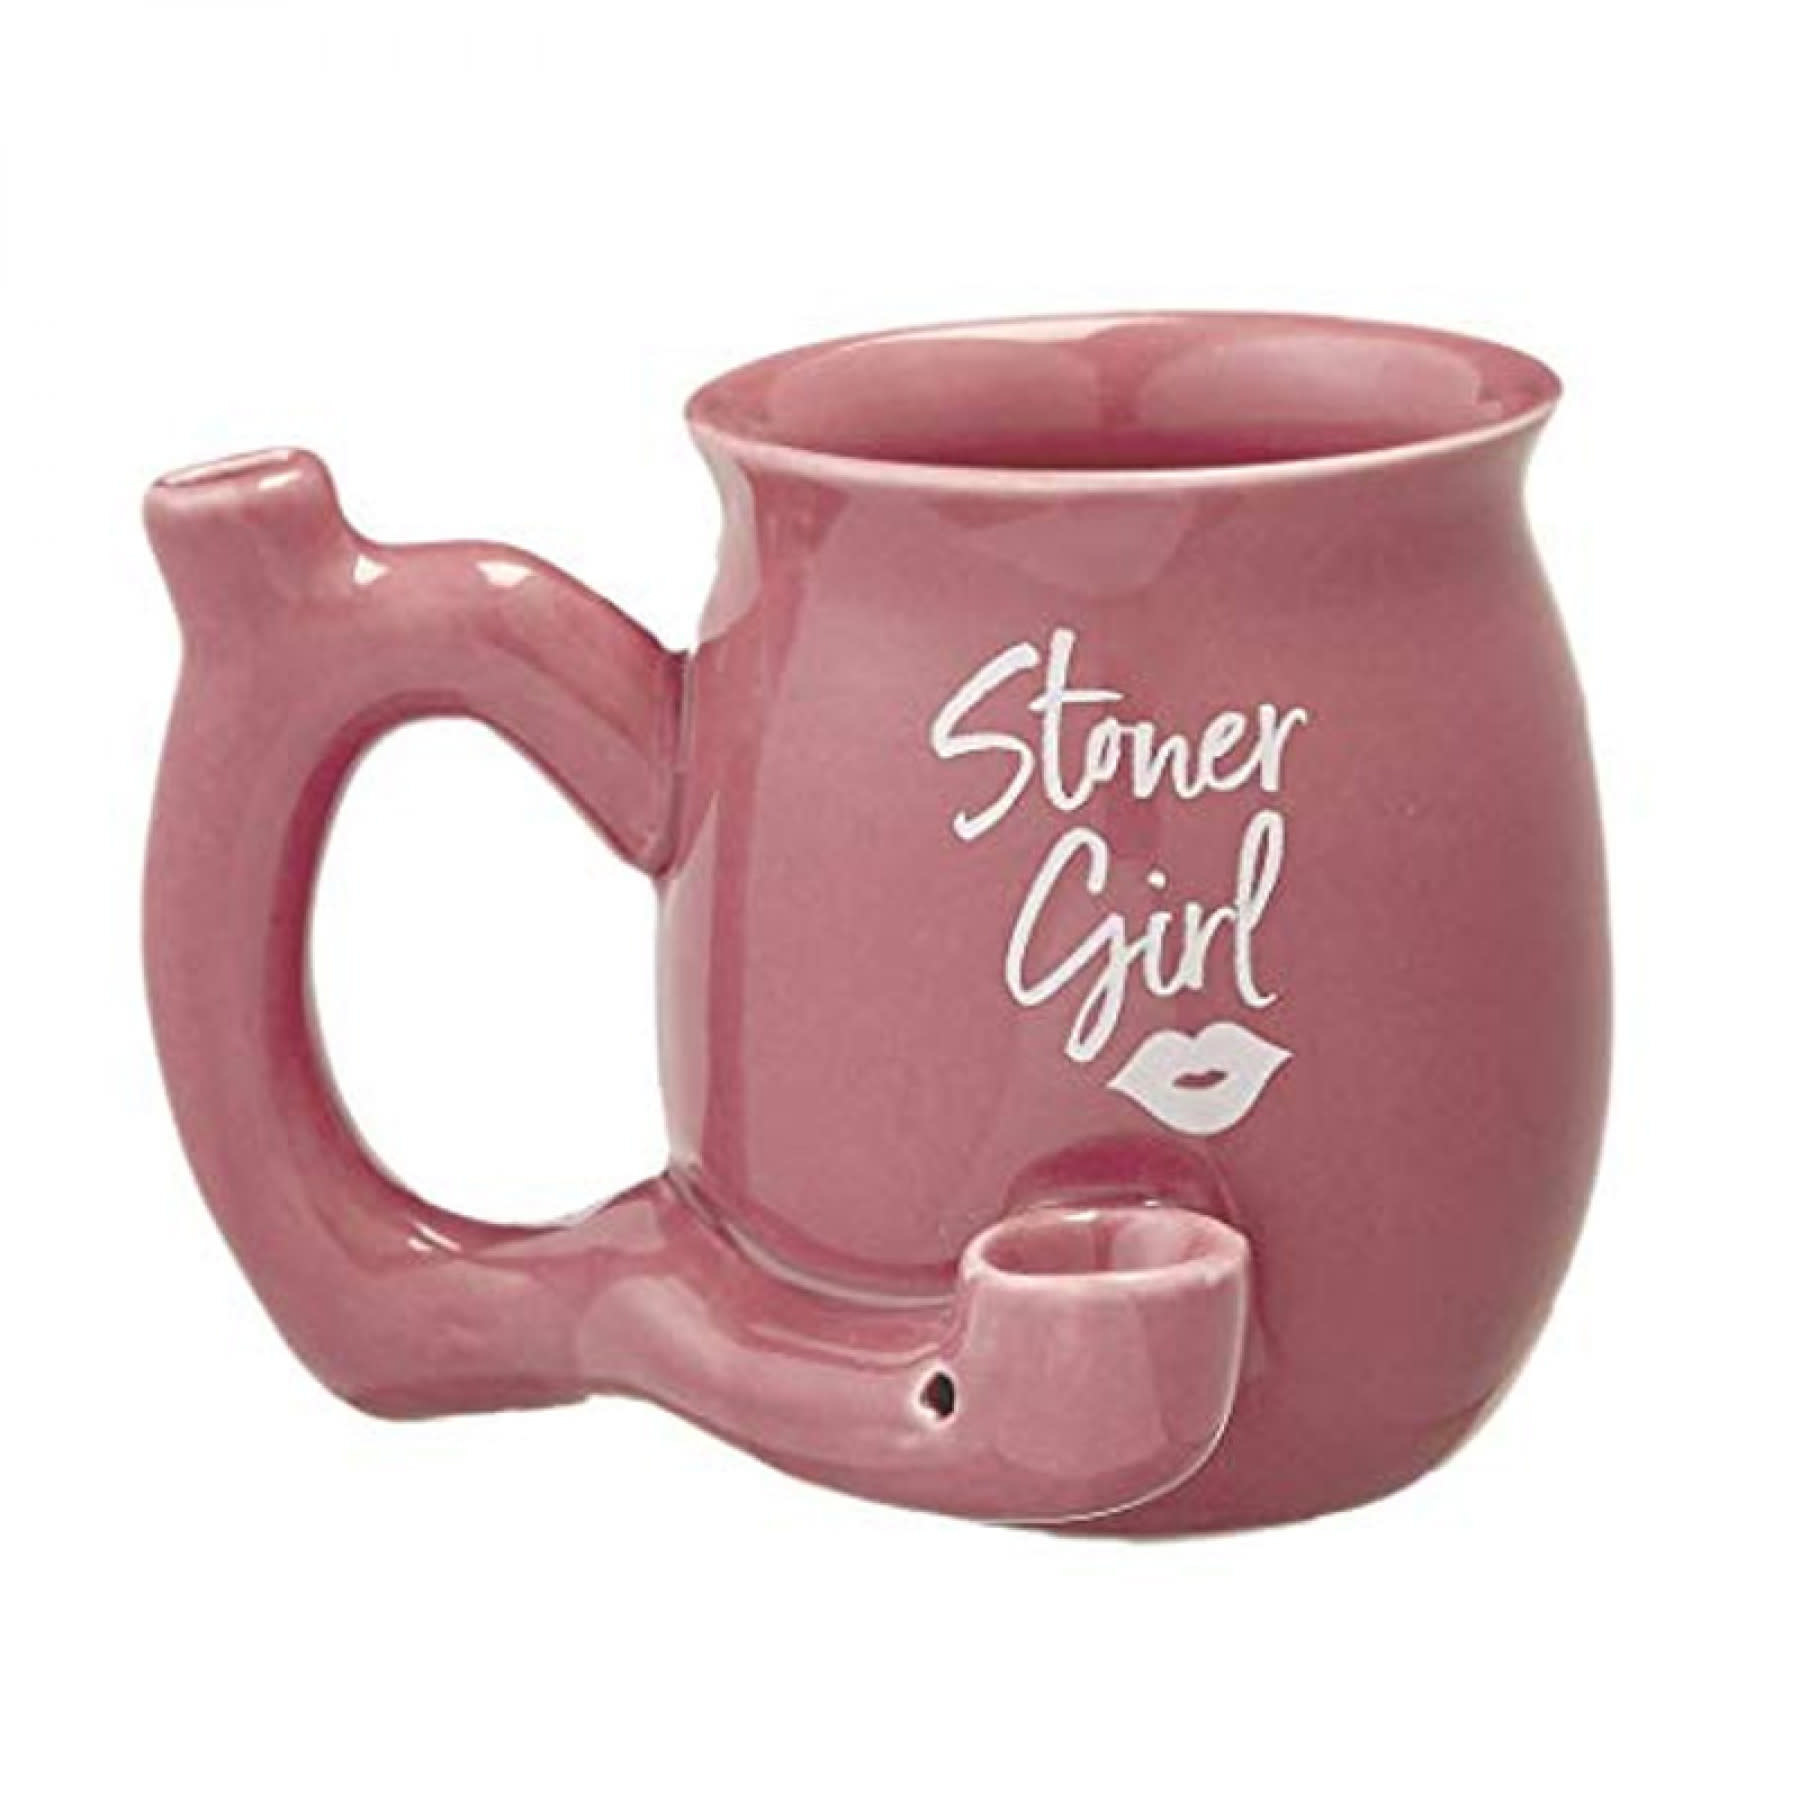 West Coast Gifts Ceramic Stoner Girl Mug Pipe - Pink